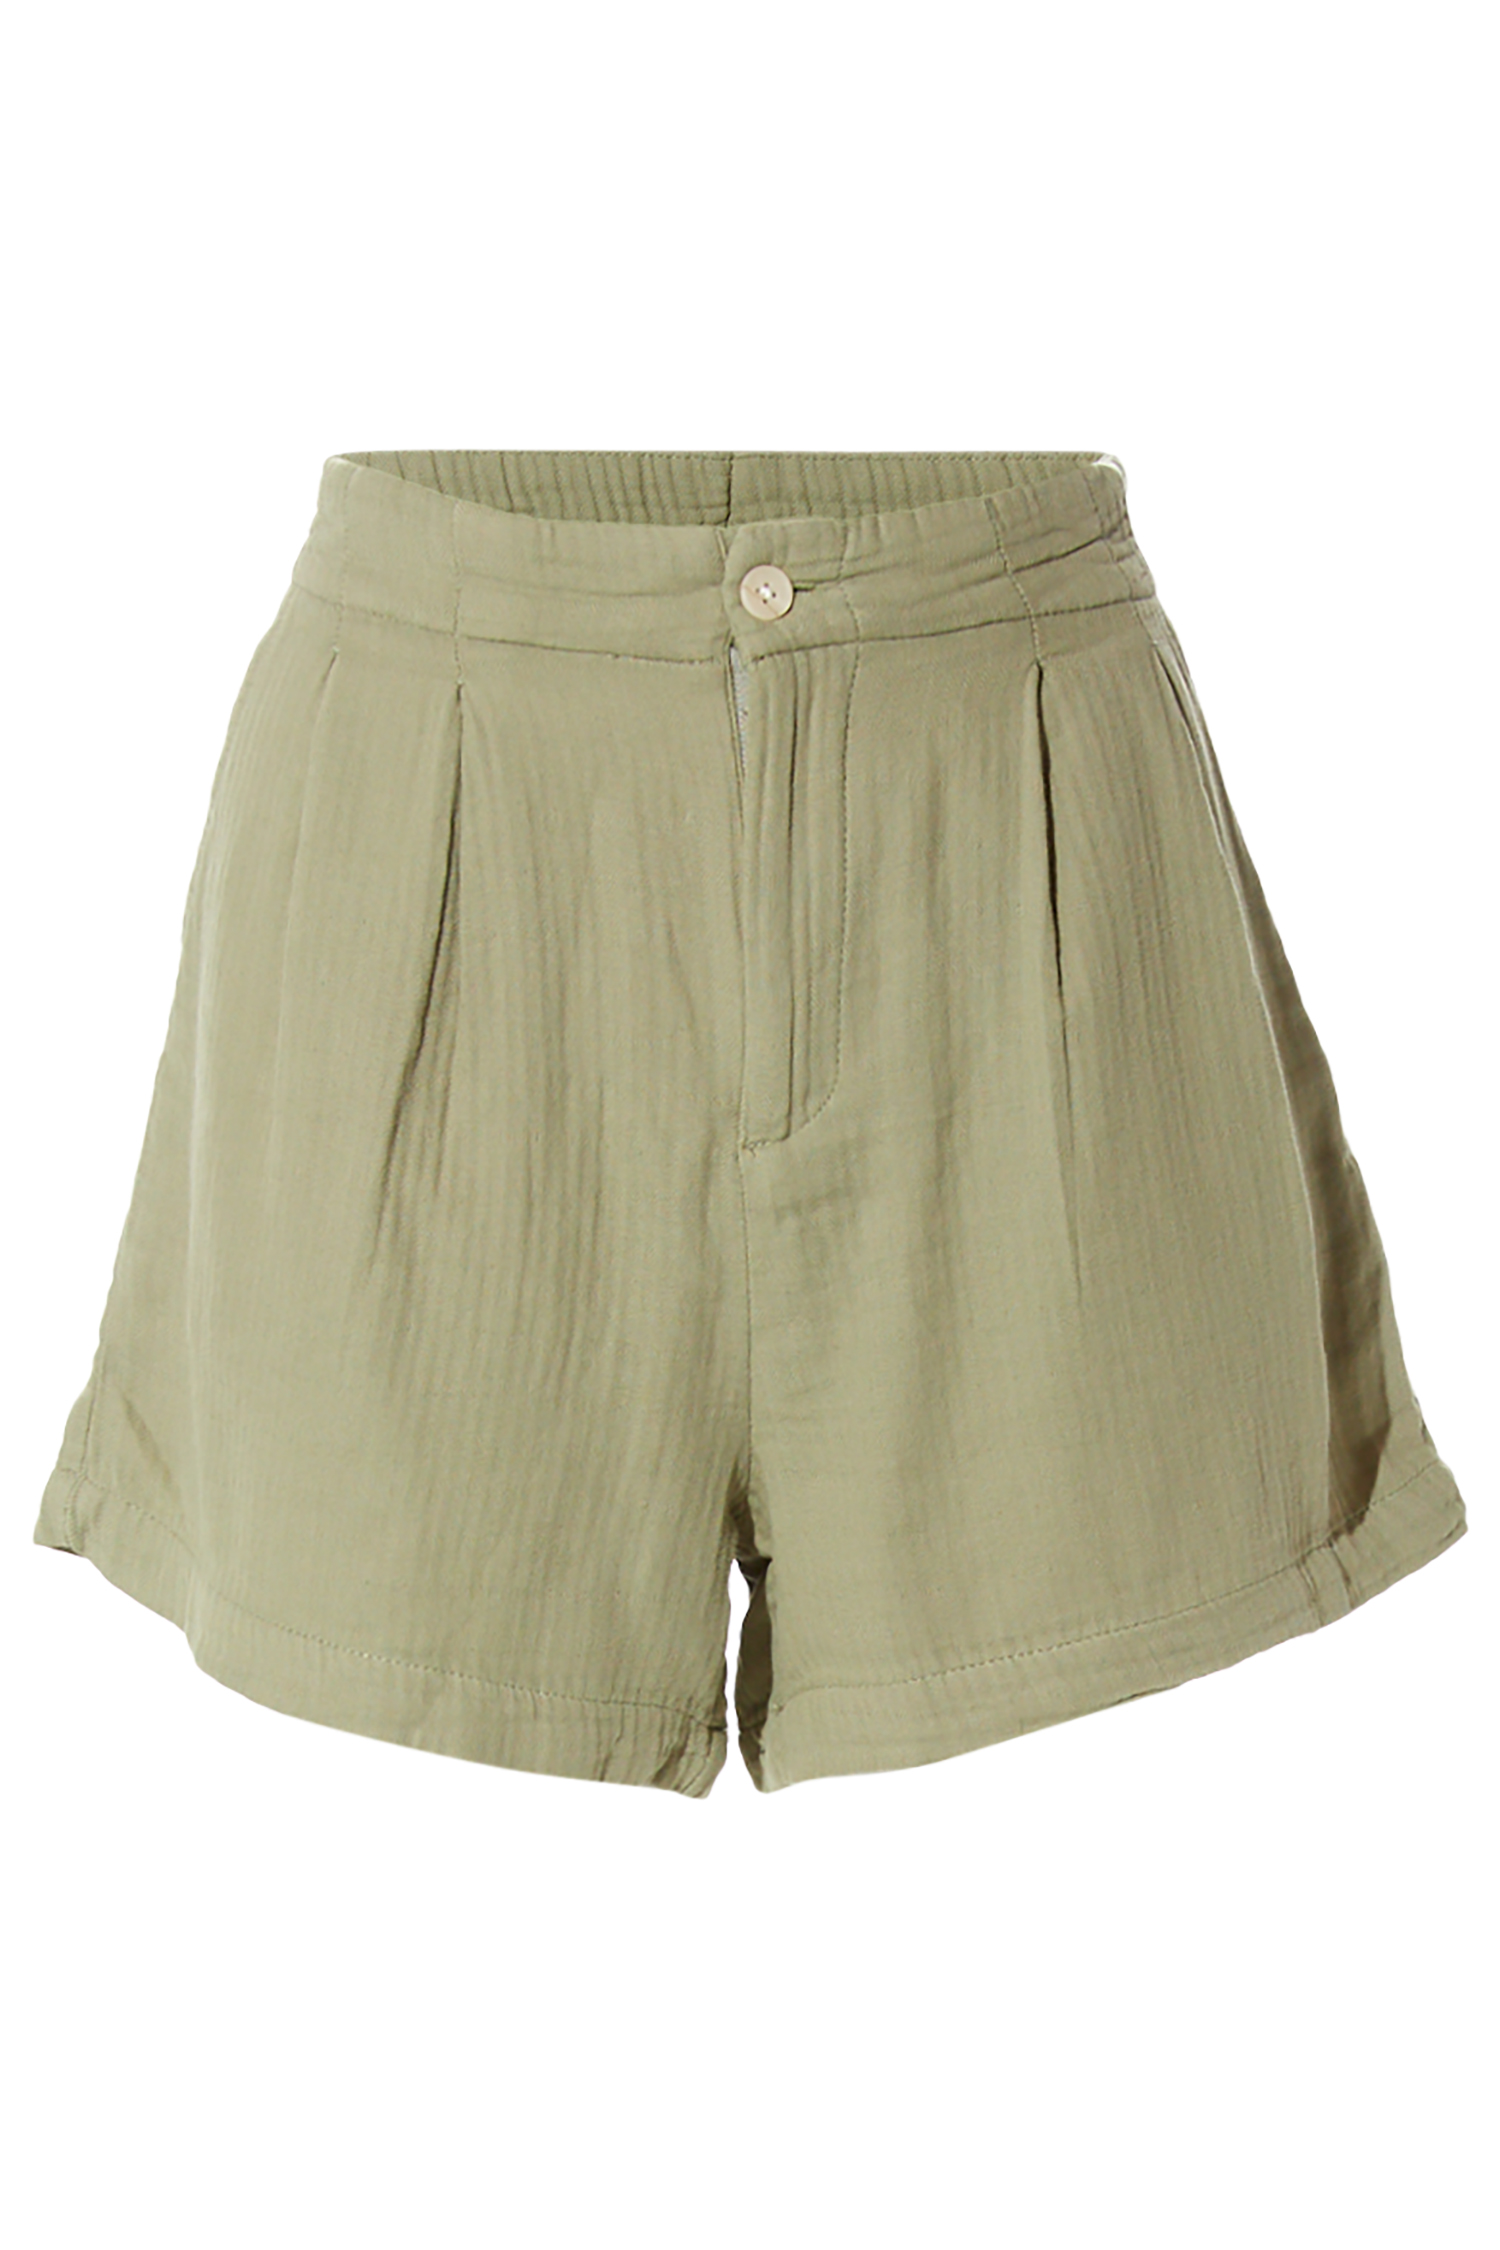 Thread & Supply Trouser Shorts